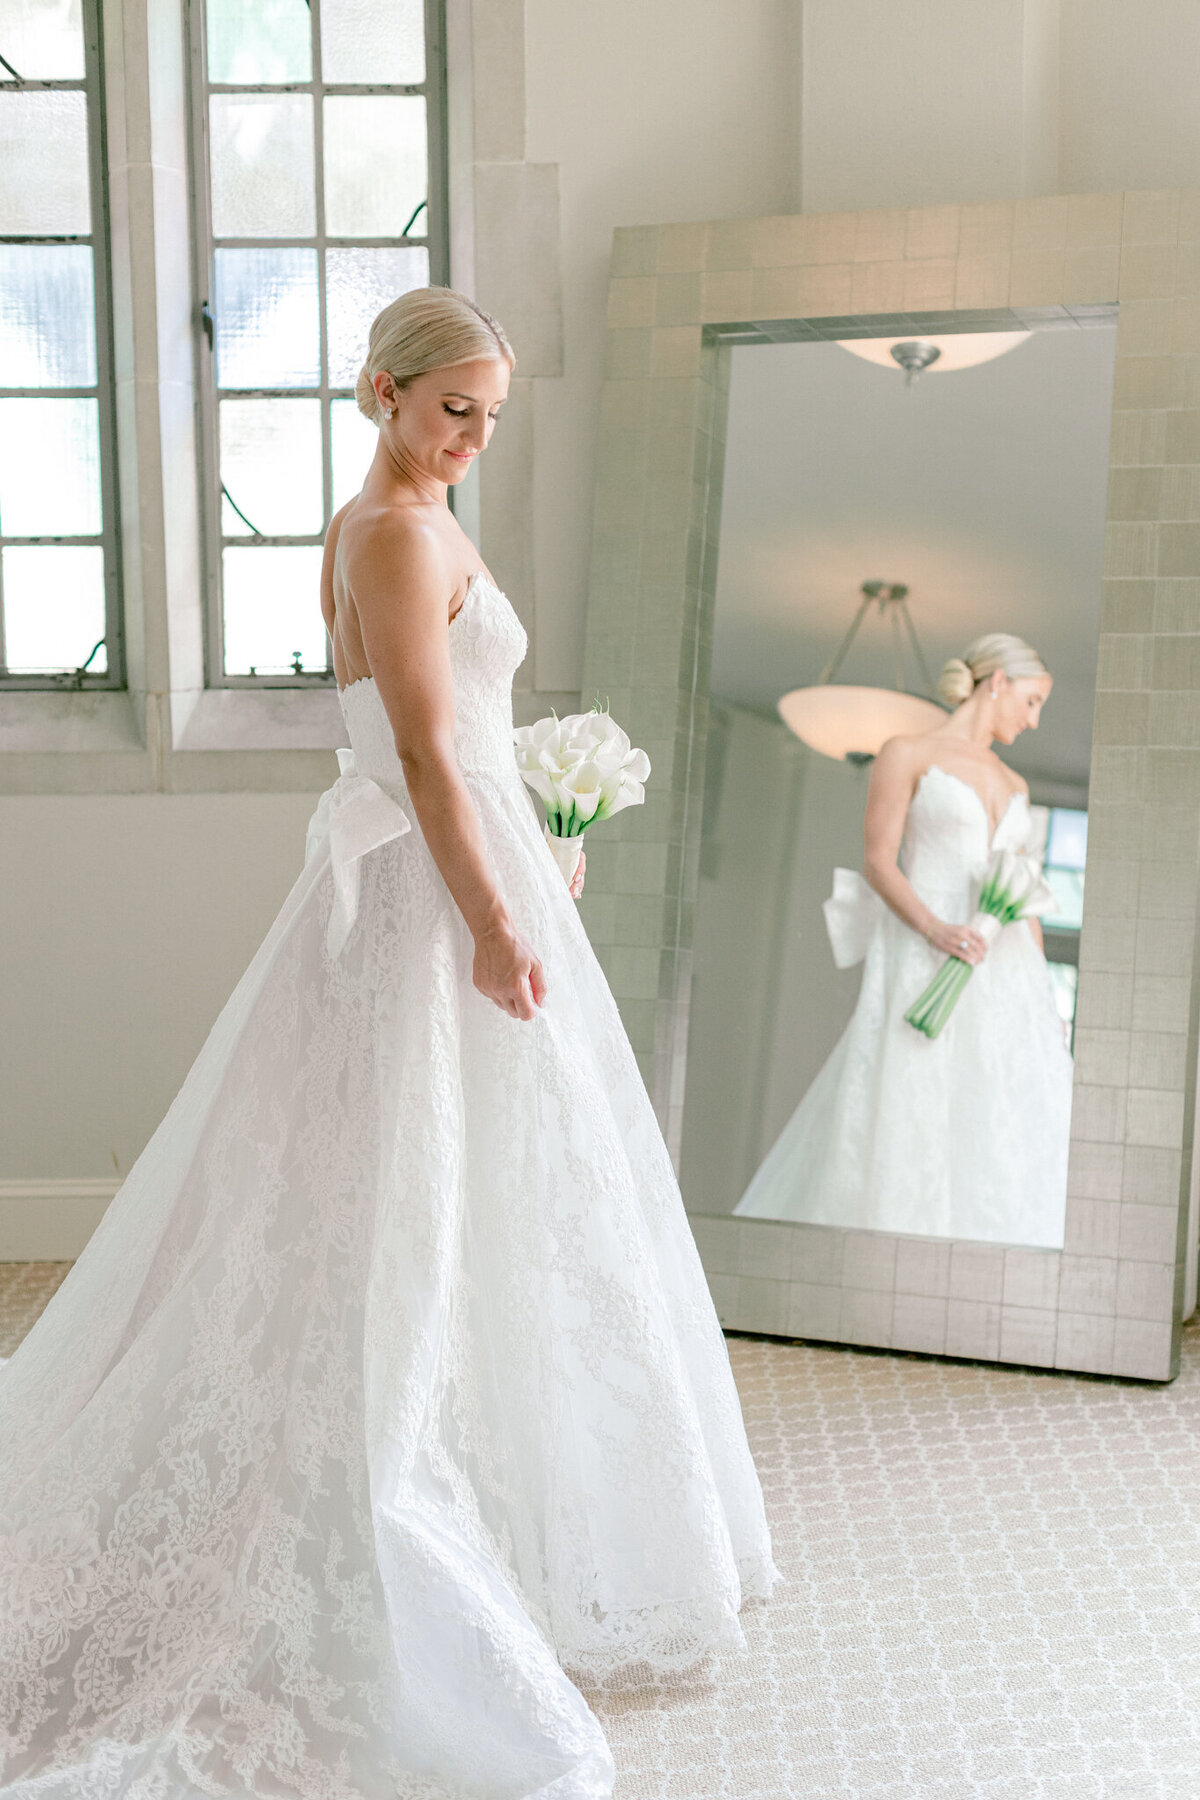 Katelyn & Kyle's Wedding at the Adolphus Hotel | Dallas Wedding Photographer | Sami Kathryn Photography-129